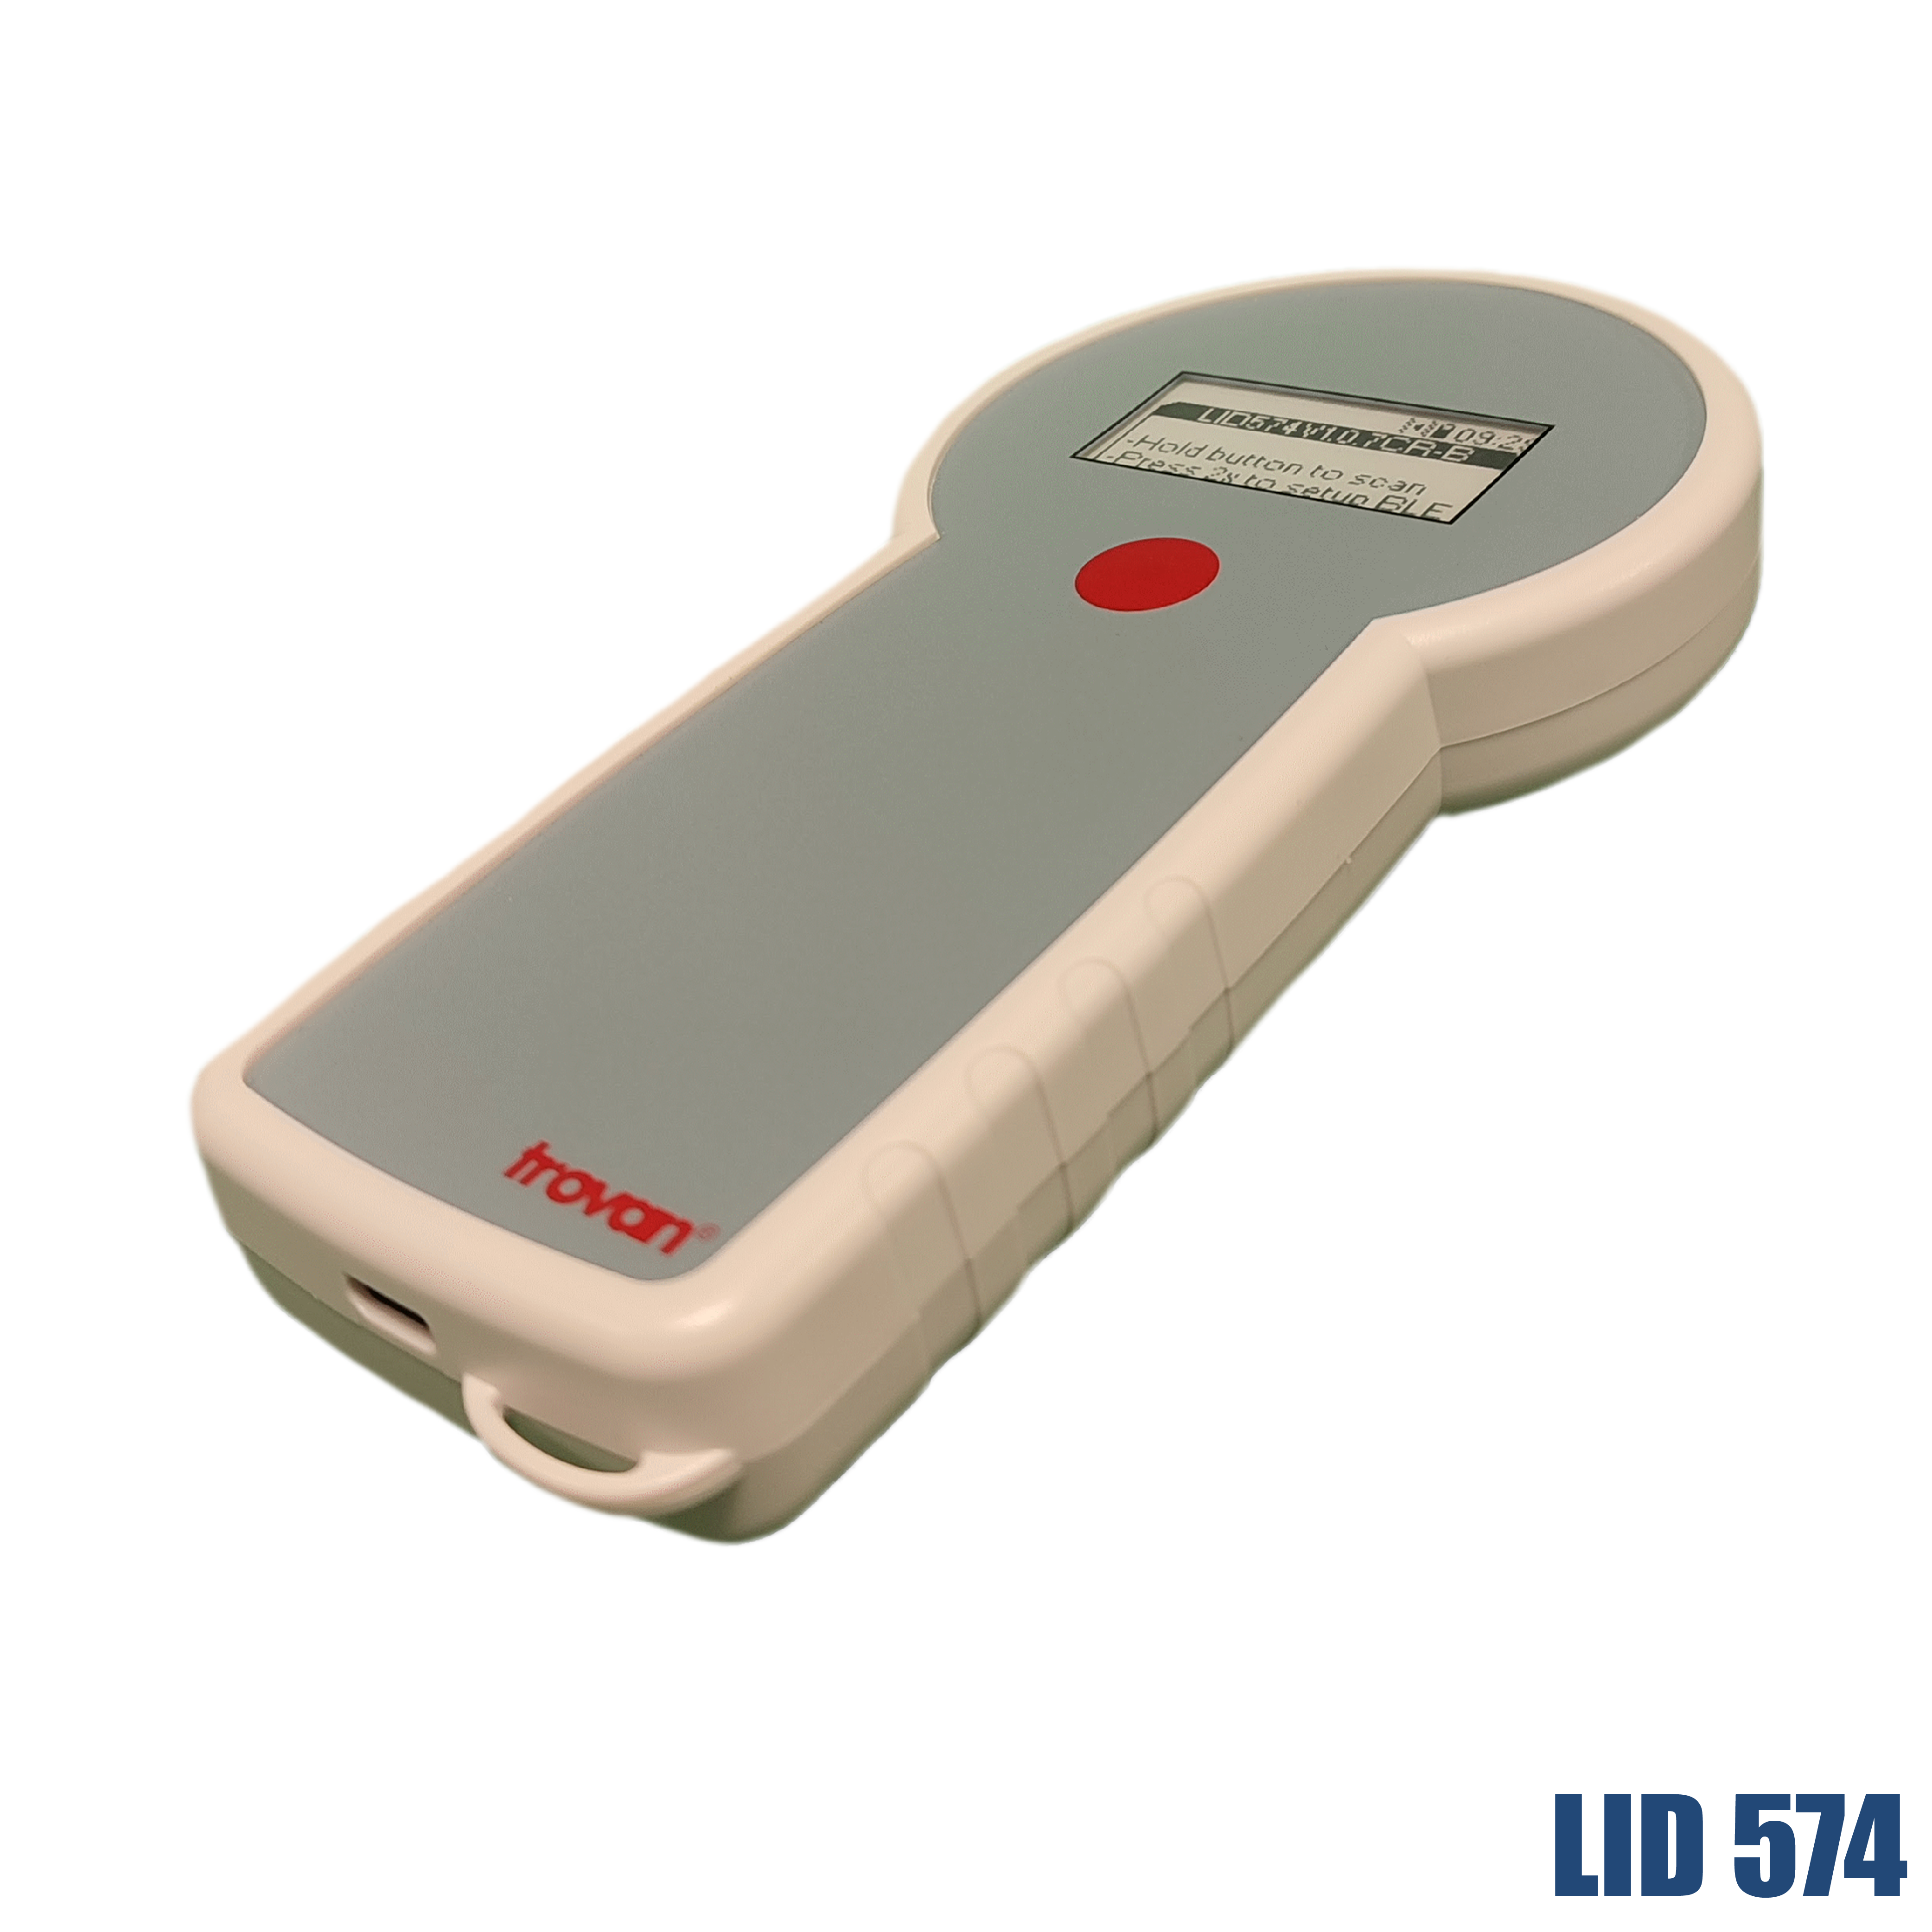 LID 574 Handheld Reader